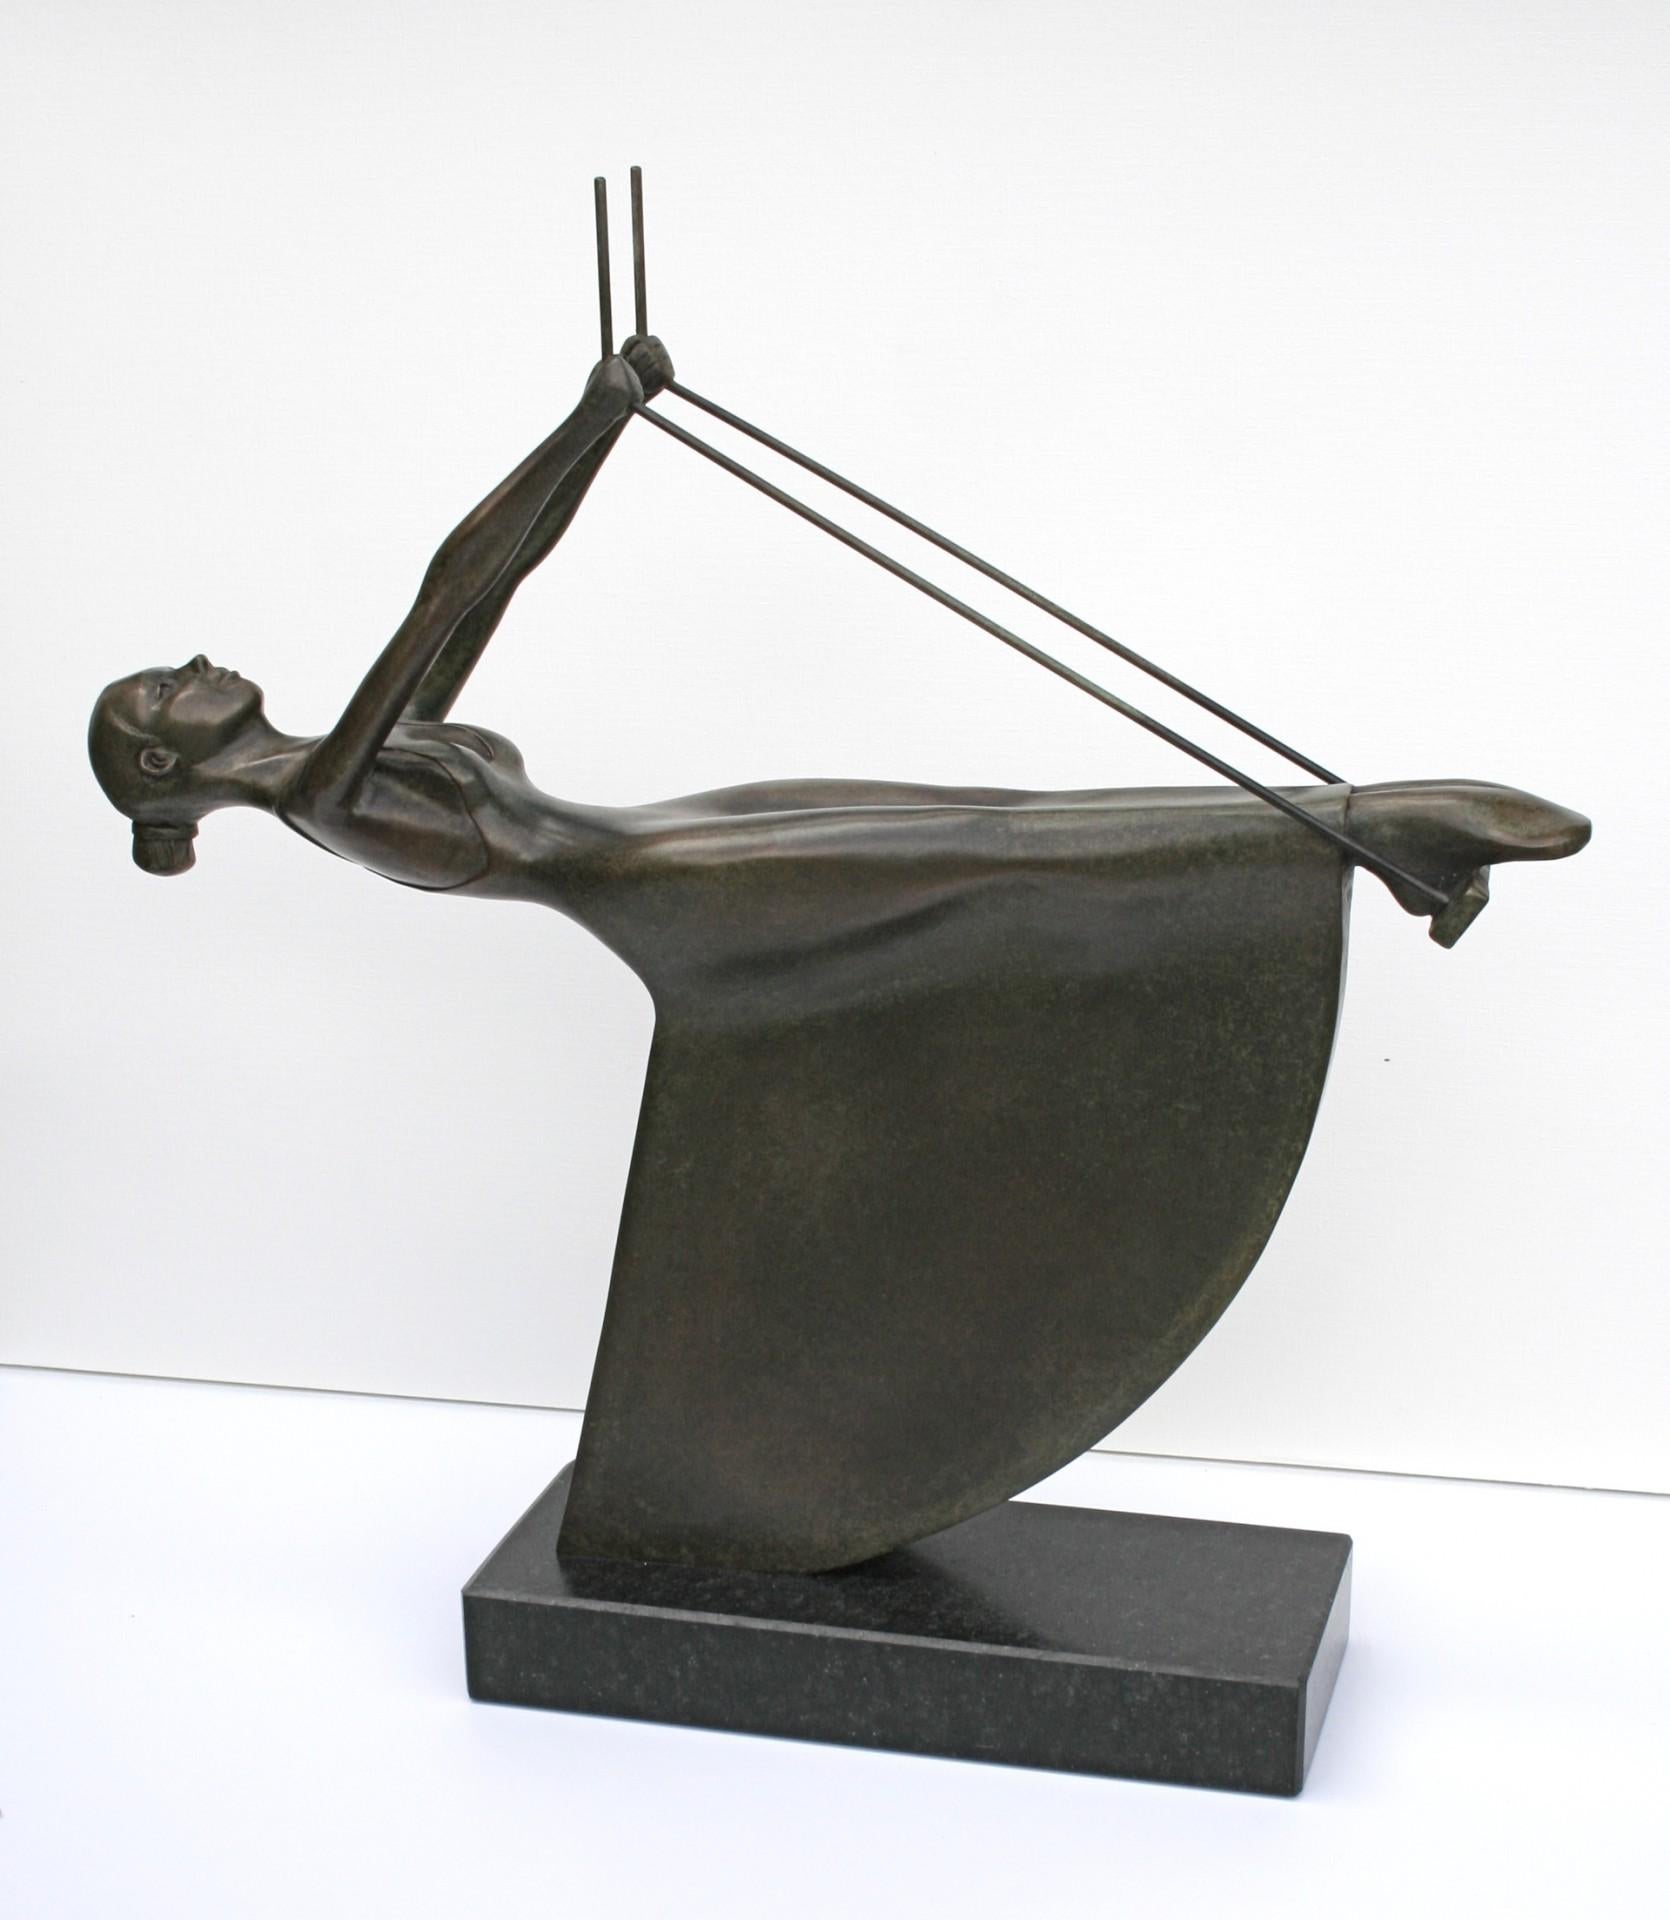 Frans van Straaten Figurative Sculpture - Swinging III - 21st Century Contemporary Bronze Sculpture of a Woman On A Swing